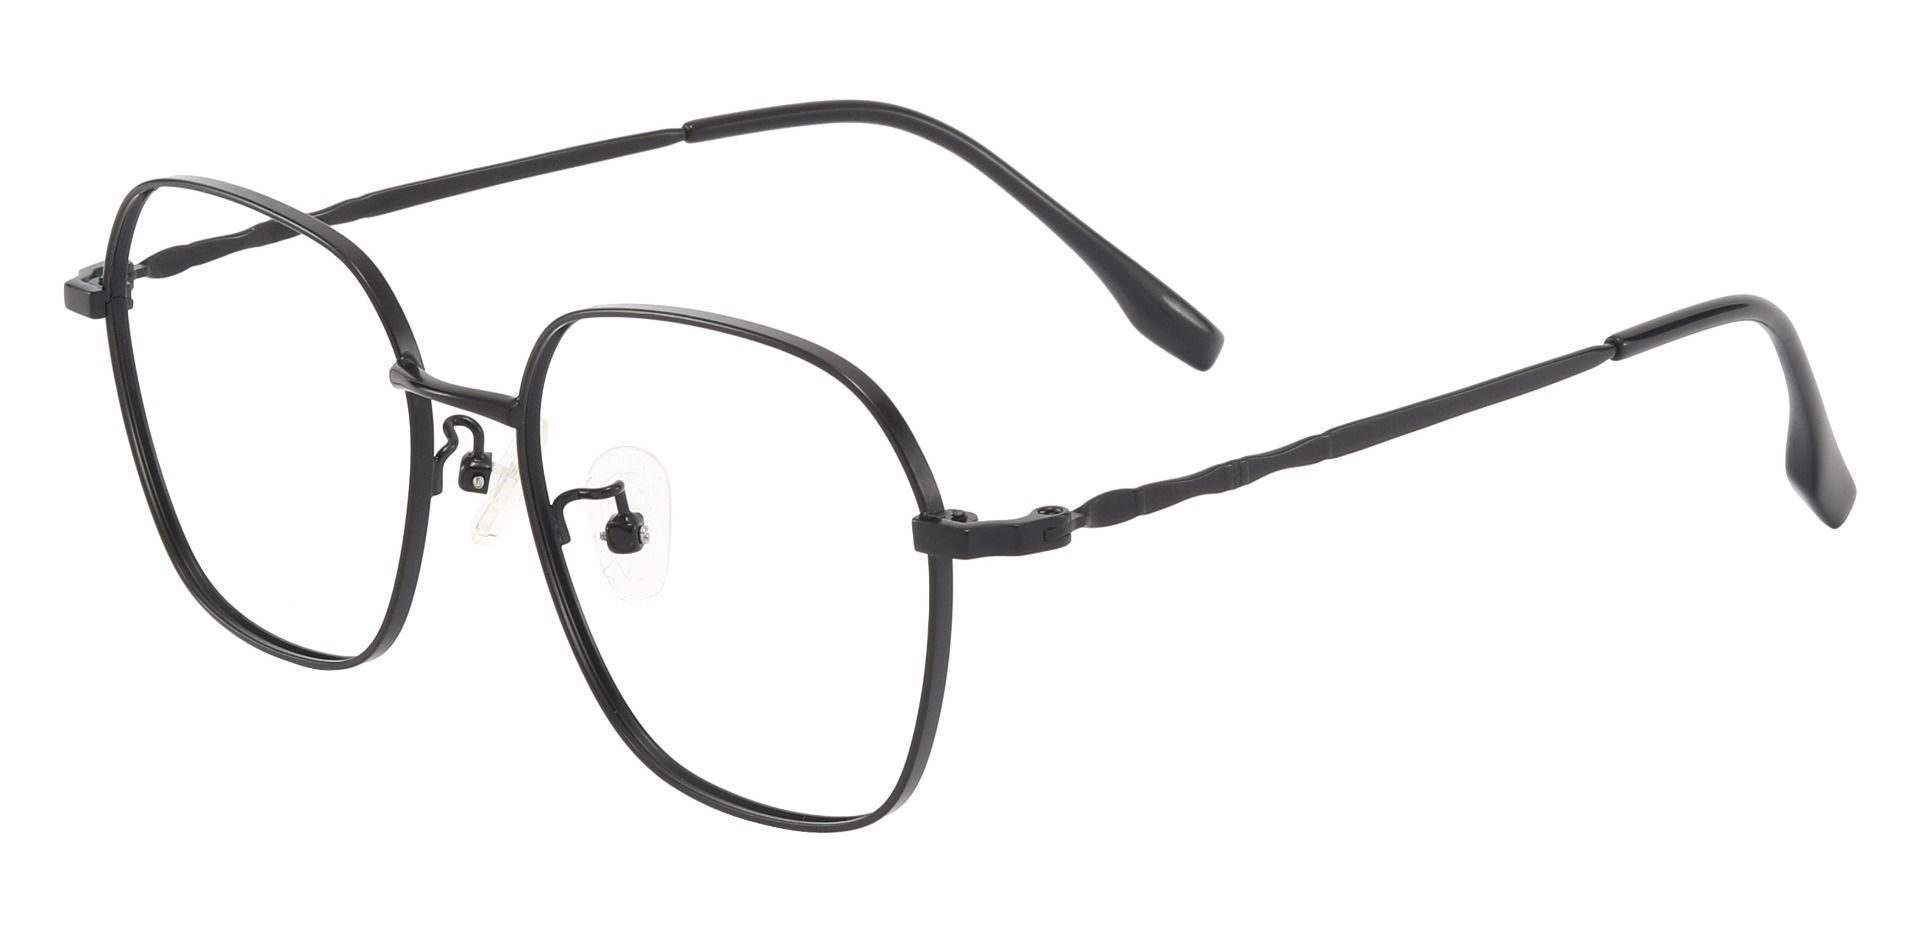 Crest Geometric Prescription Glasses - Black